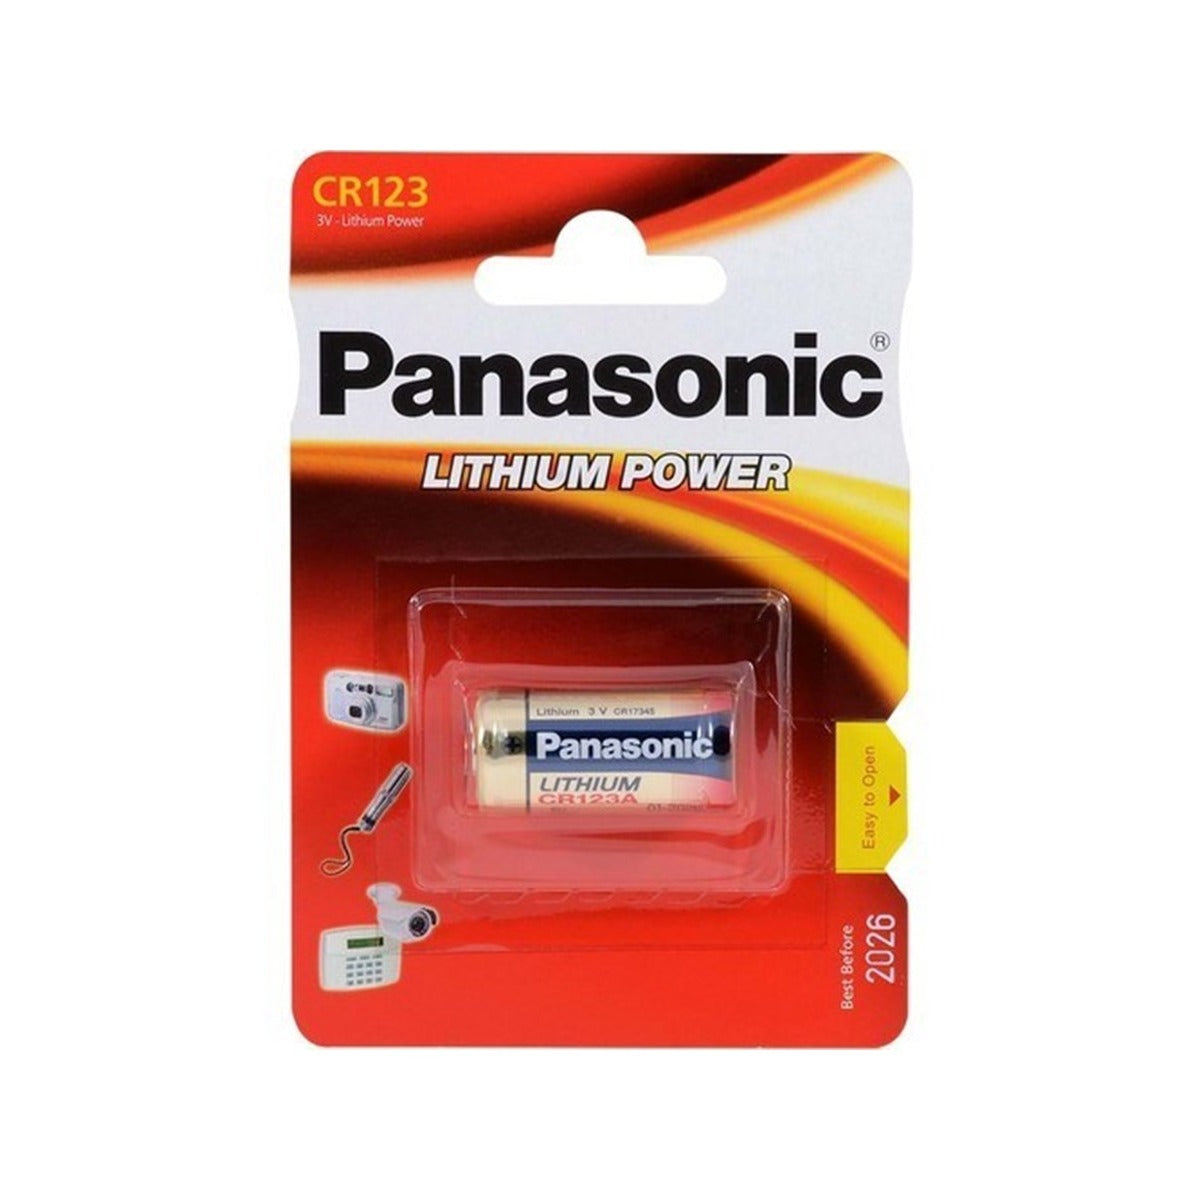 Panasonic - Lithium CR123 Battery - 3V - Continental Food Store